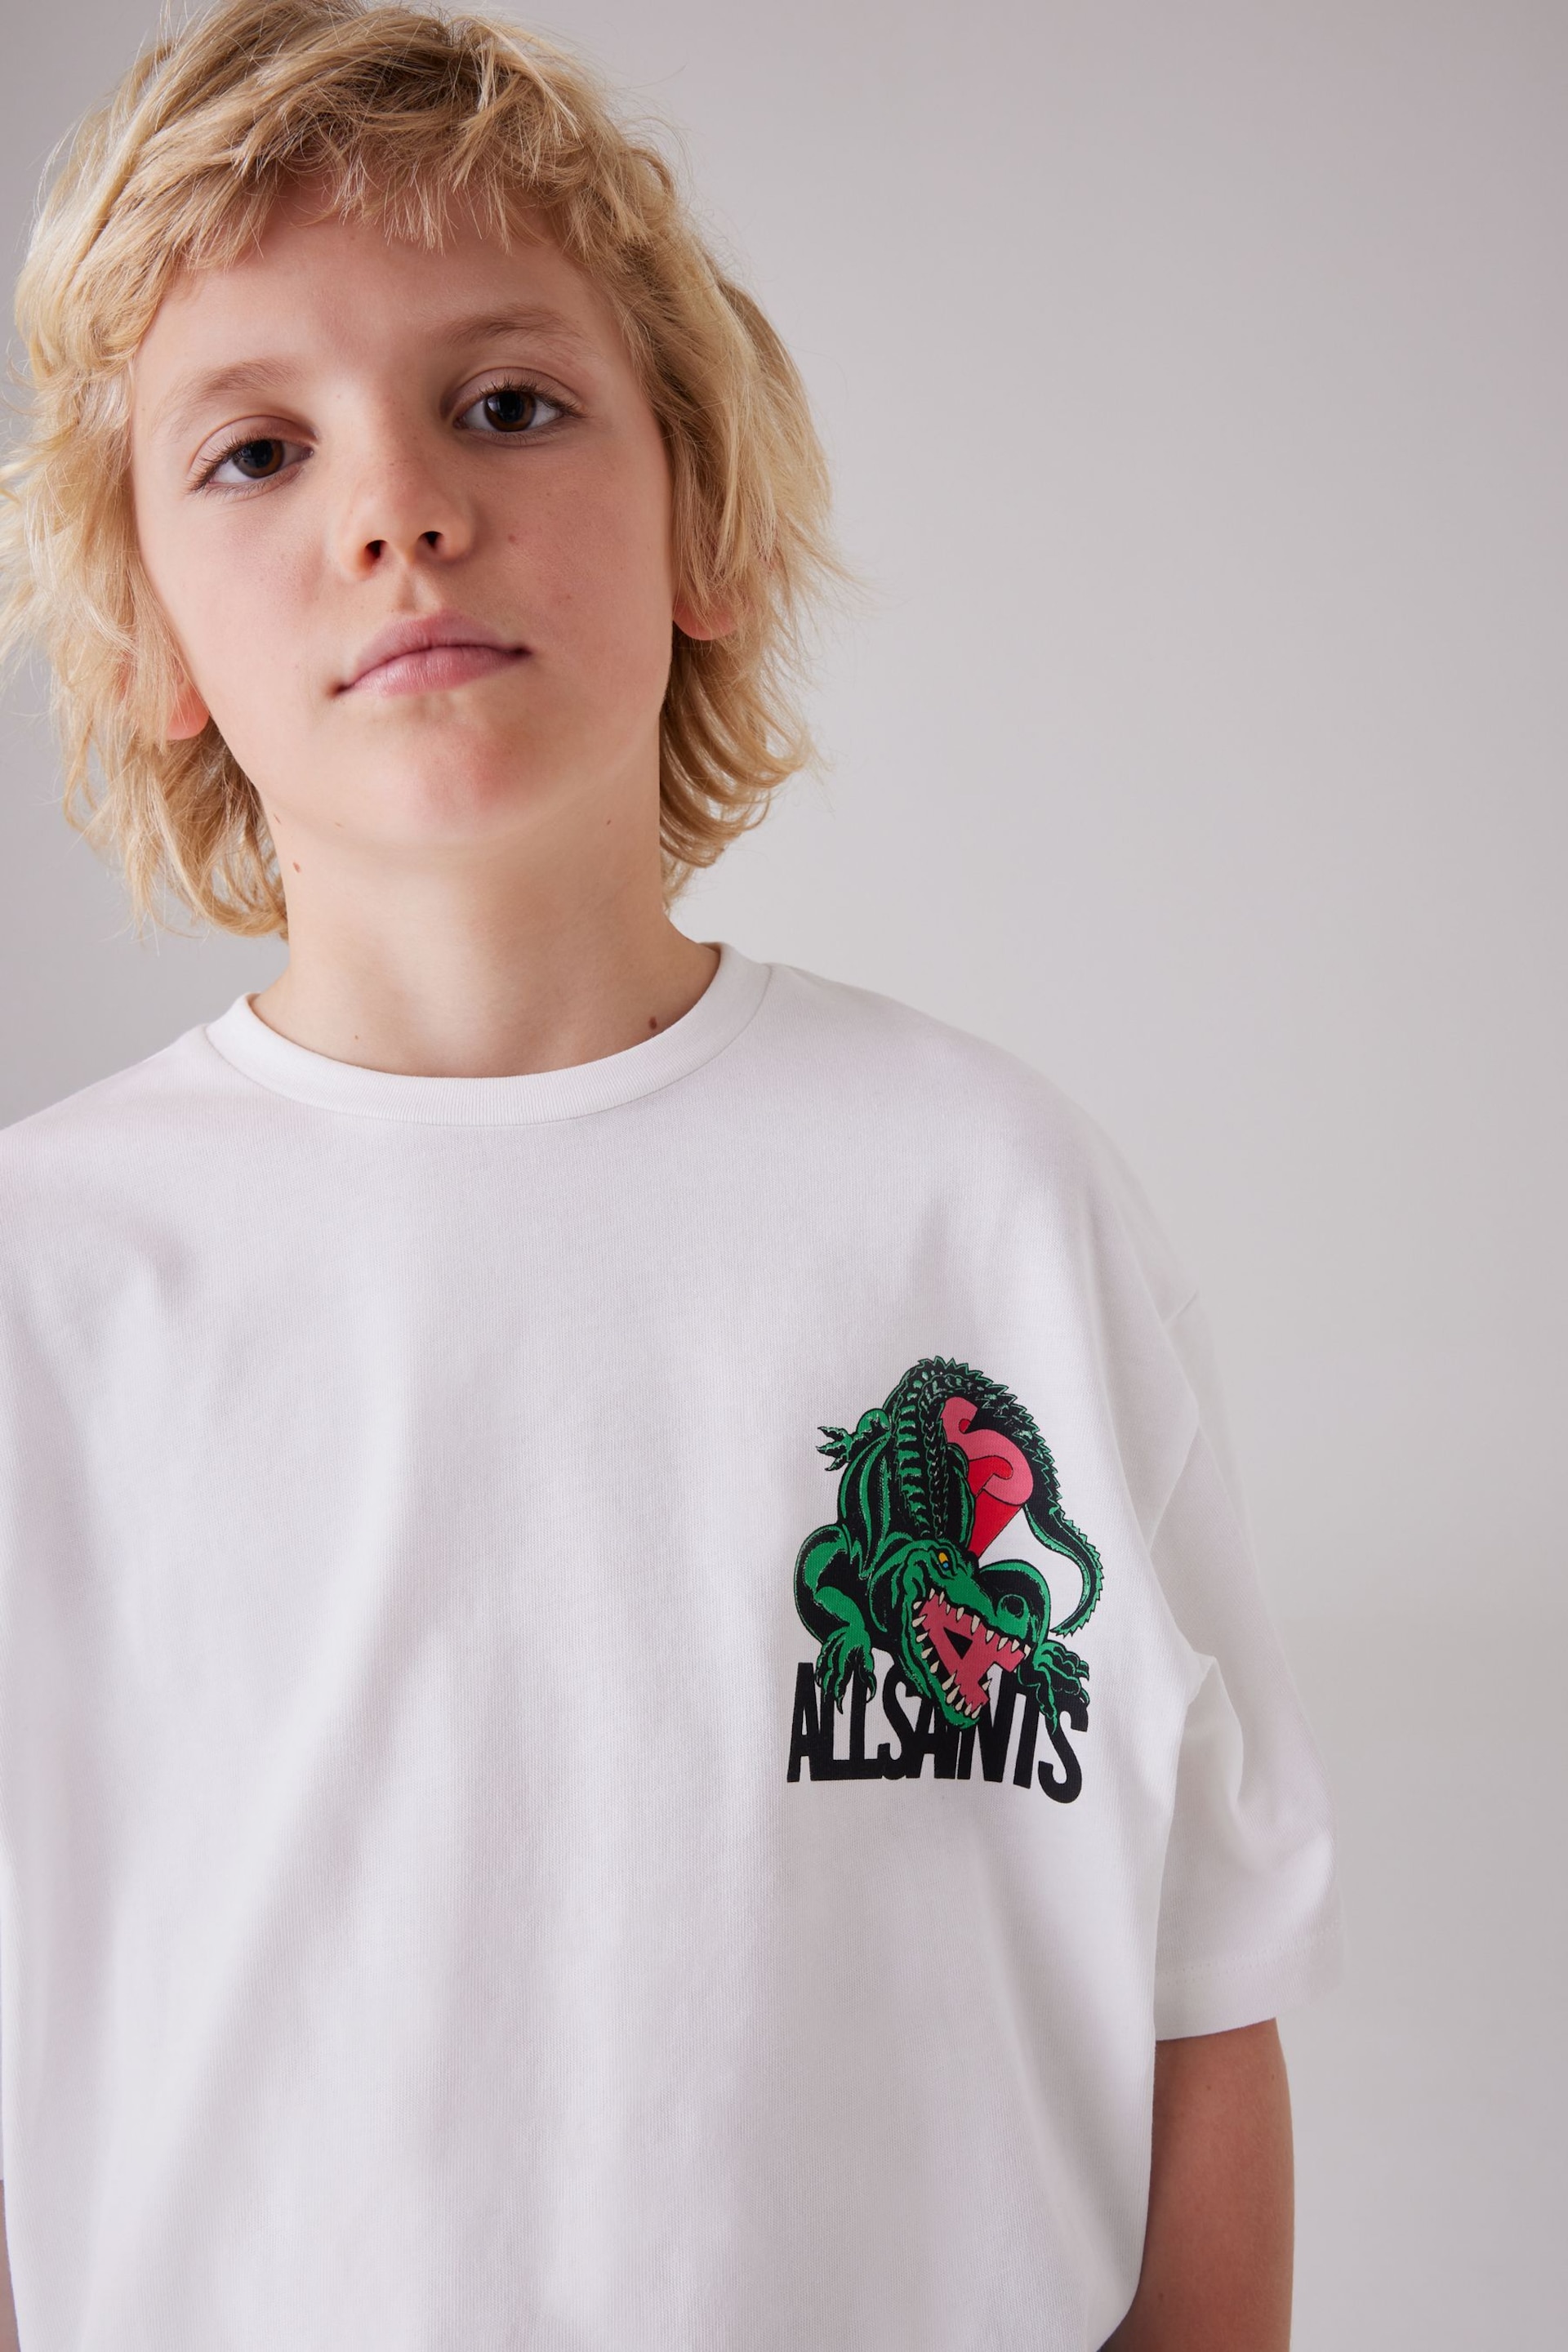 smALLSAINTS White/Gator Boys Graphic Oversized Crew T-Shirt - Image 4 of 8